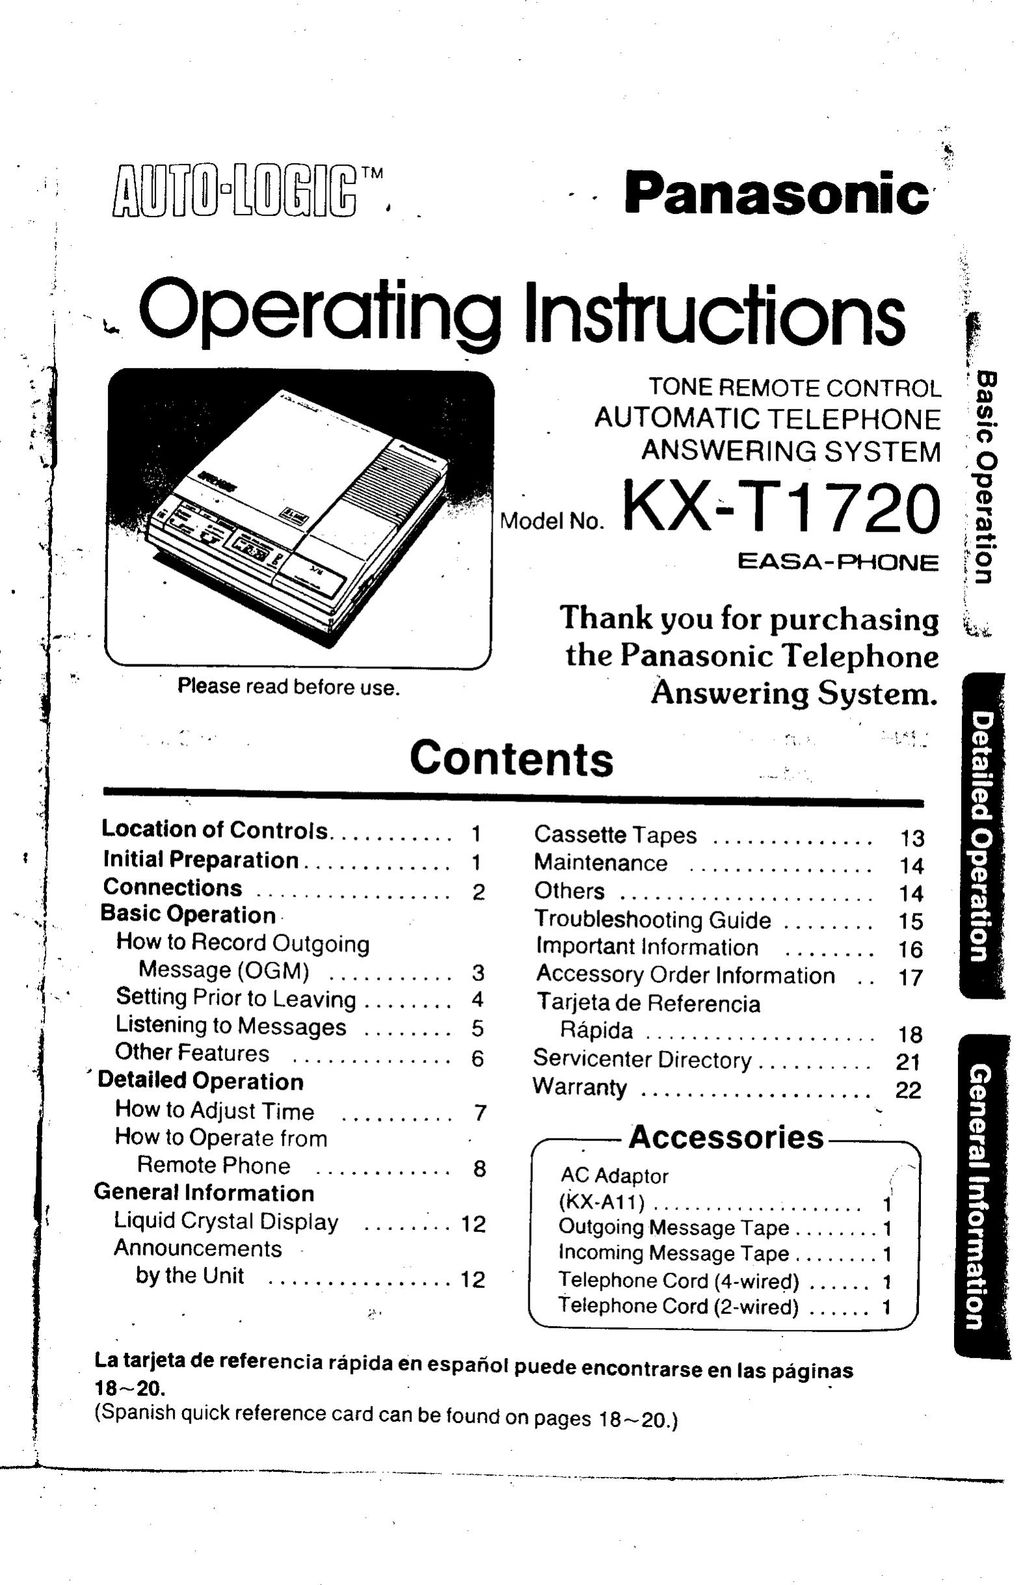 Panasonic KX-T1720 Answering Machine User Manual